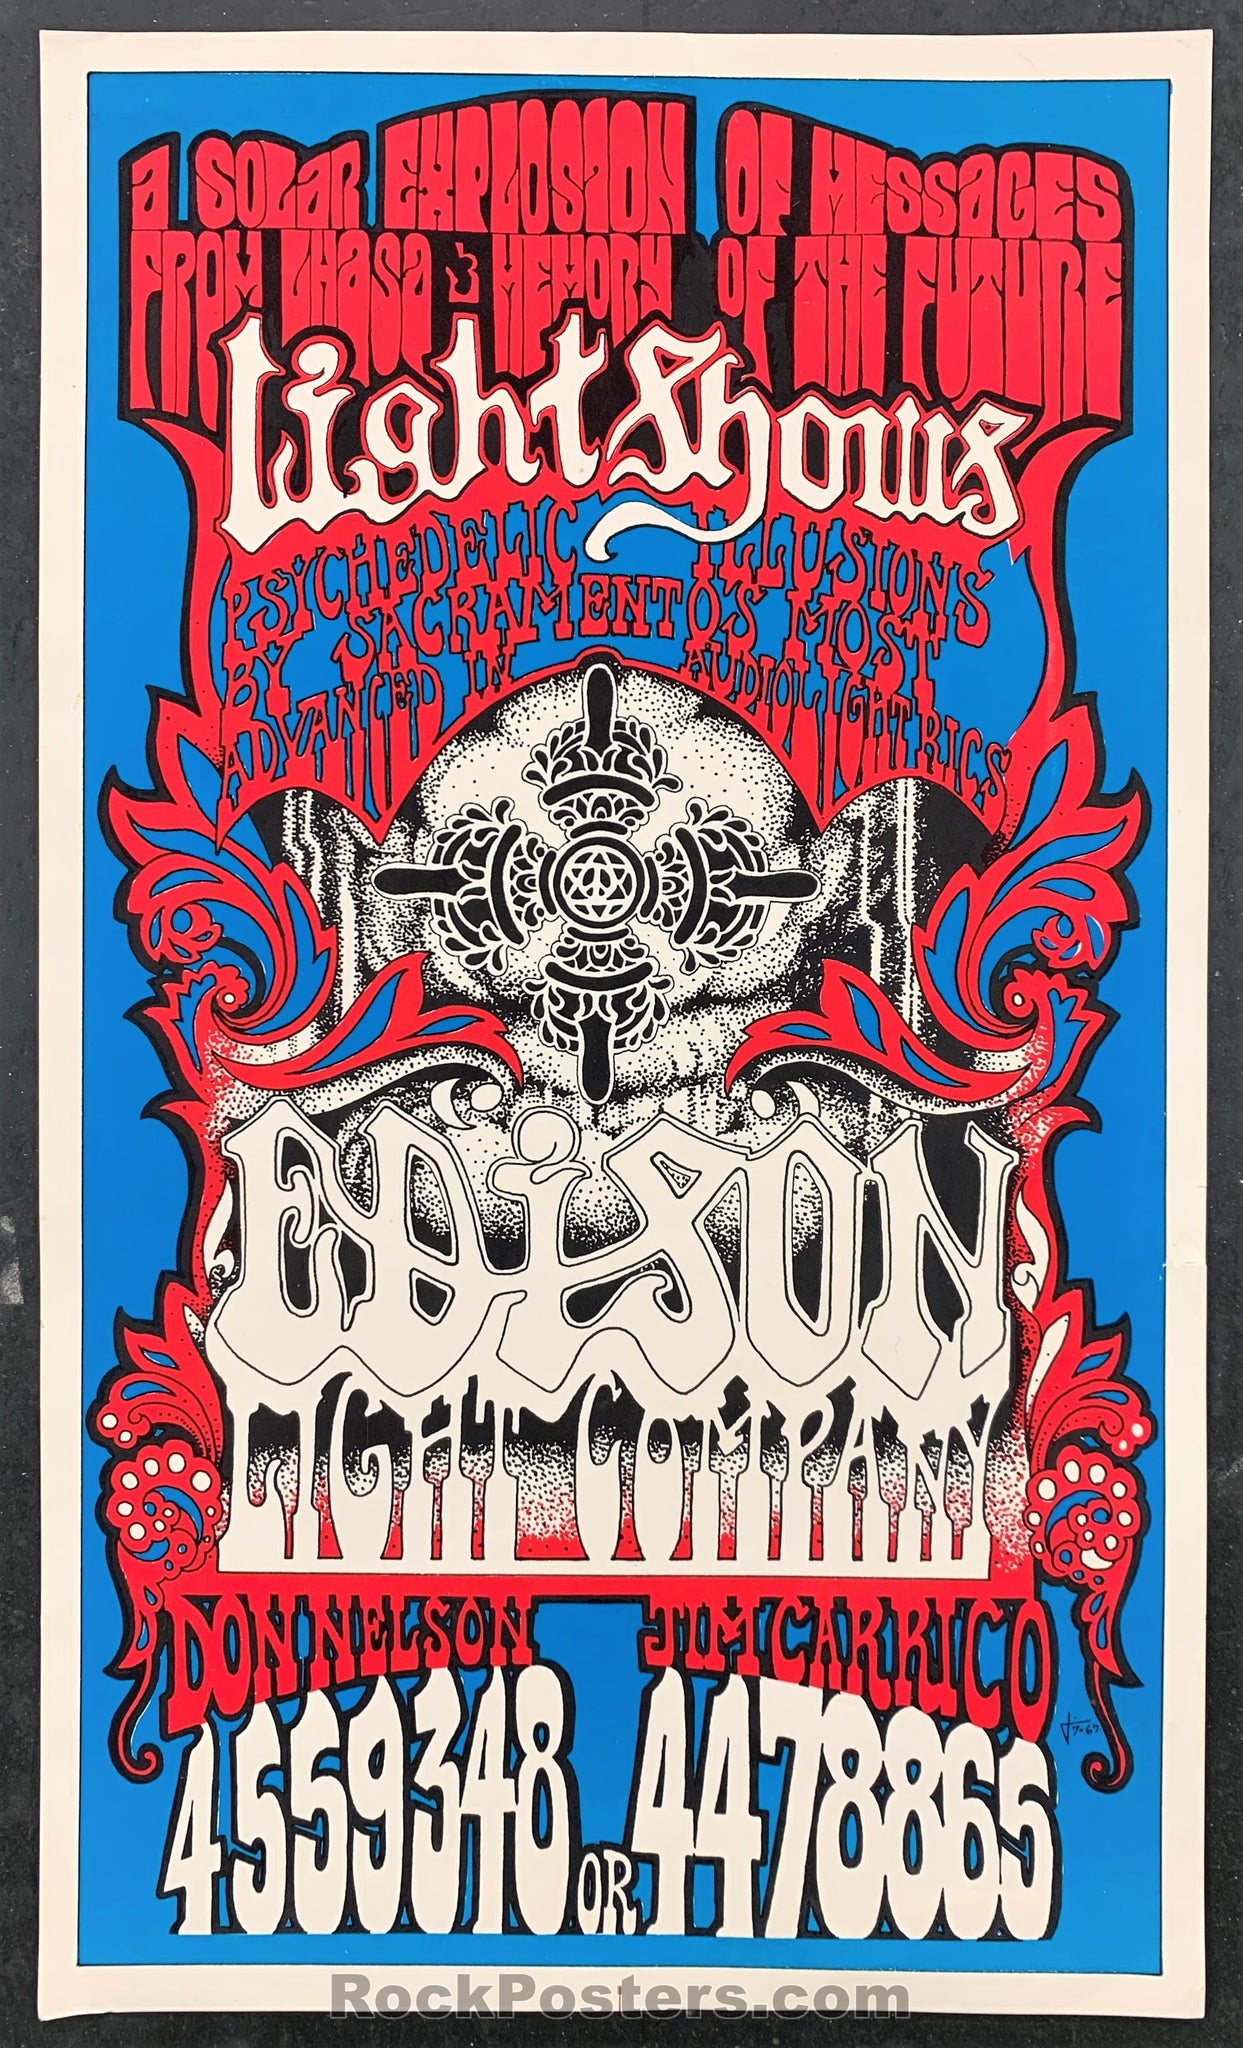 AUCTION - Edison Light Co. - Sacramento 1967 Psychedelic Light Show Handbill - Excellent